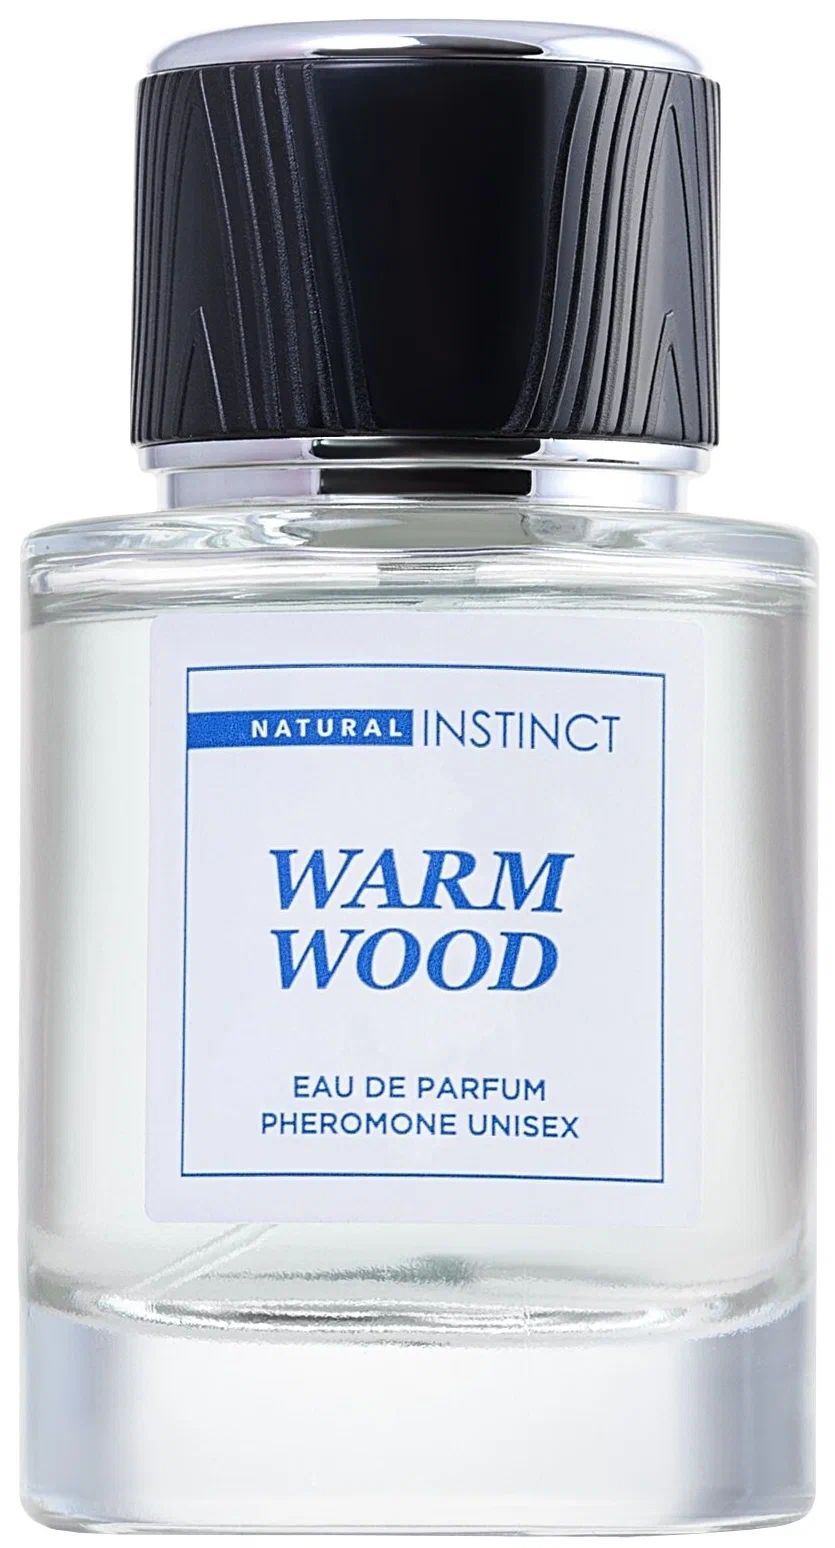 Парфюмерная вода-унисекс с феромонами Natural Instinct Warm Wood, 50 мл natural instinct парфюмированный спрей для тела с феромонами love goddess 100